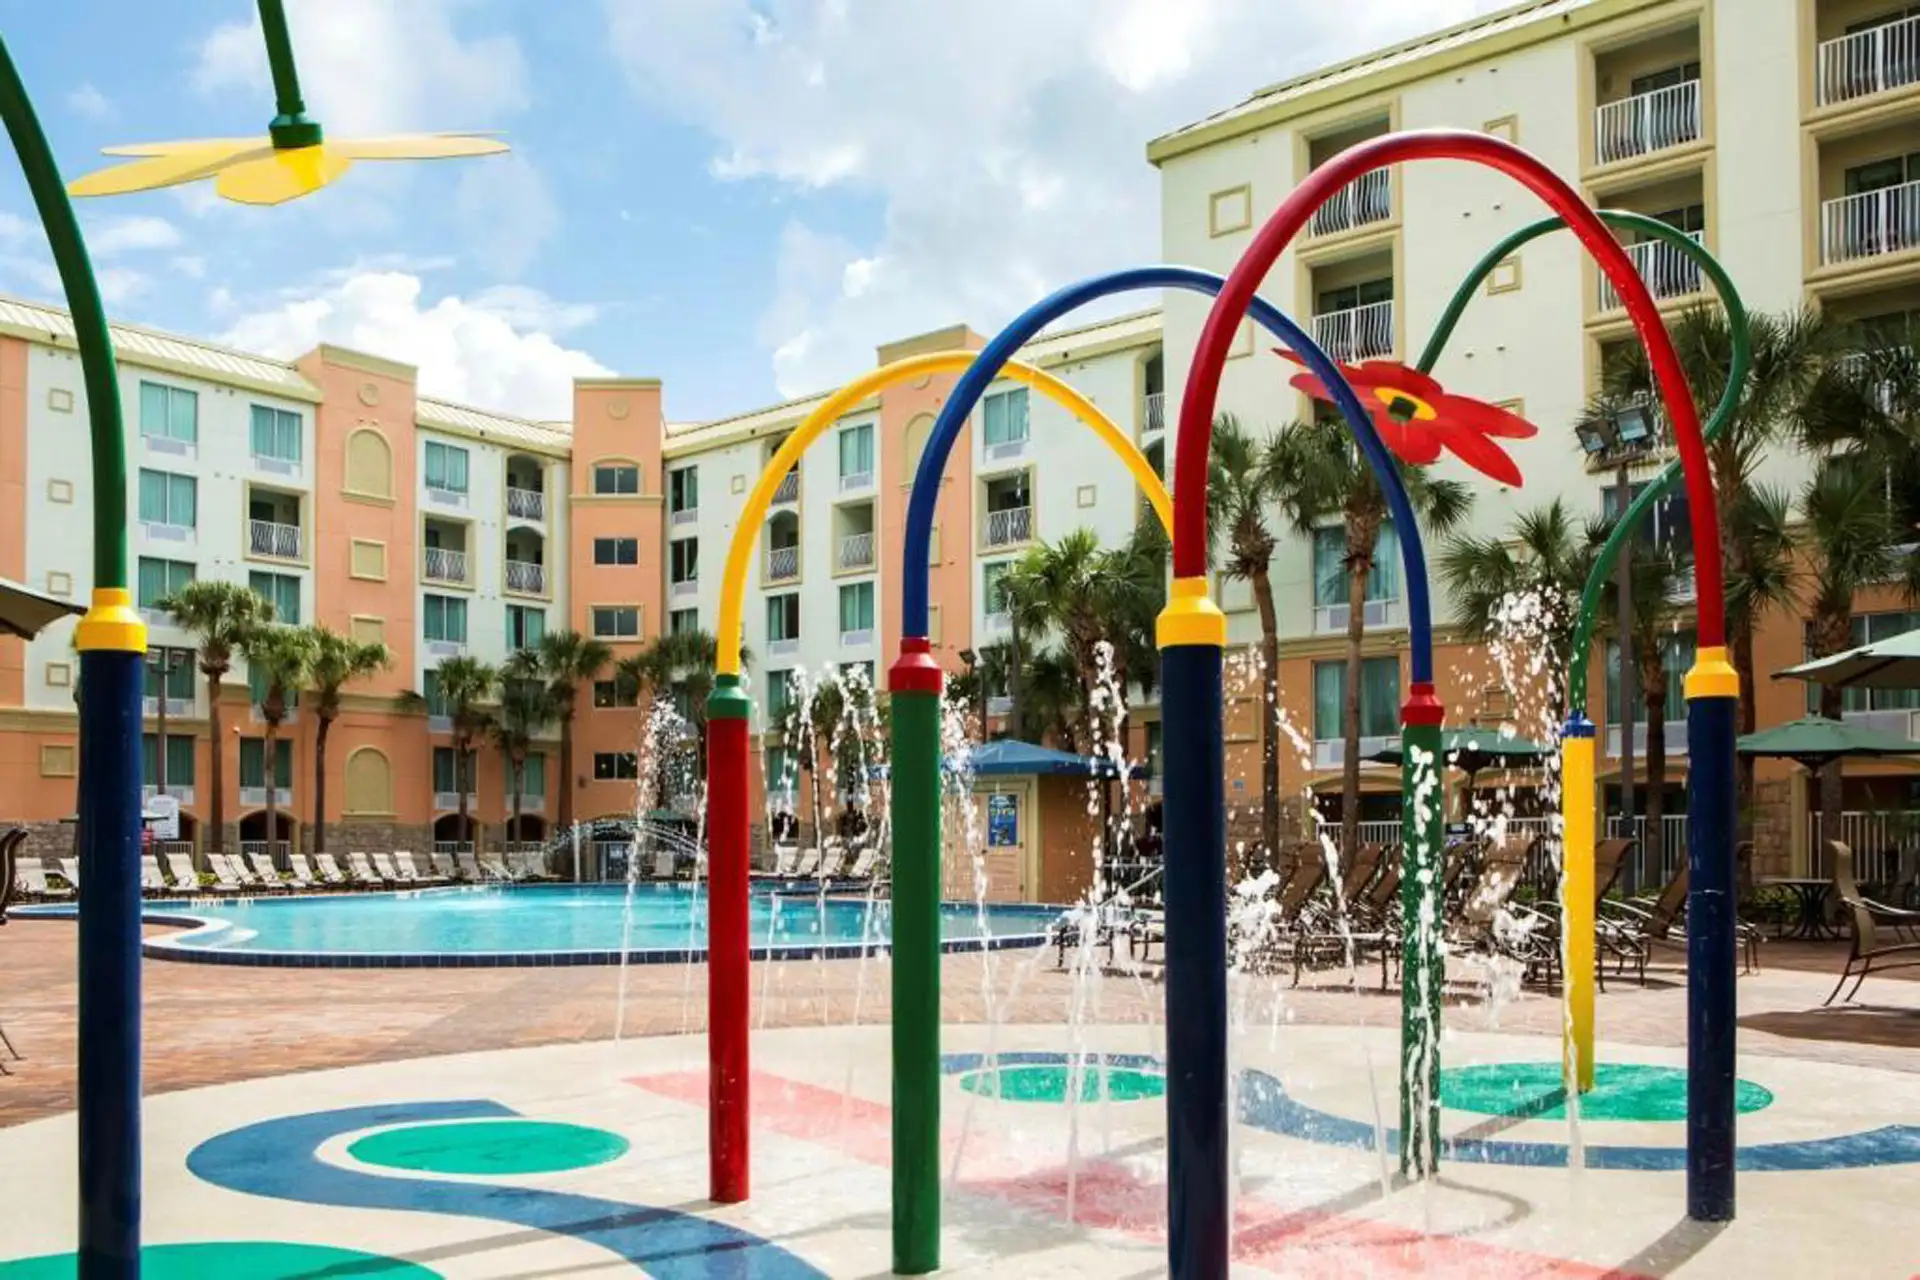 Spray Ground at Holiday Inn Buena Vista in Orlando